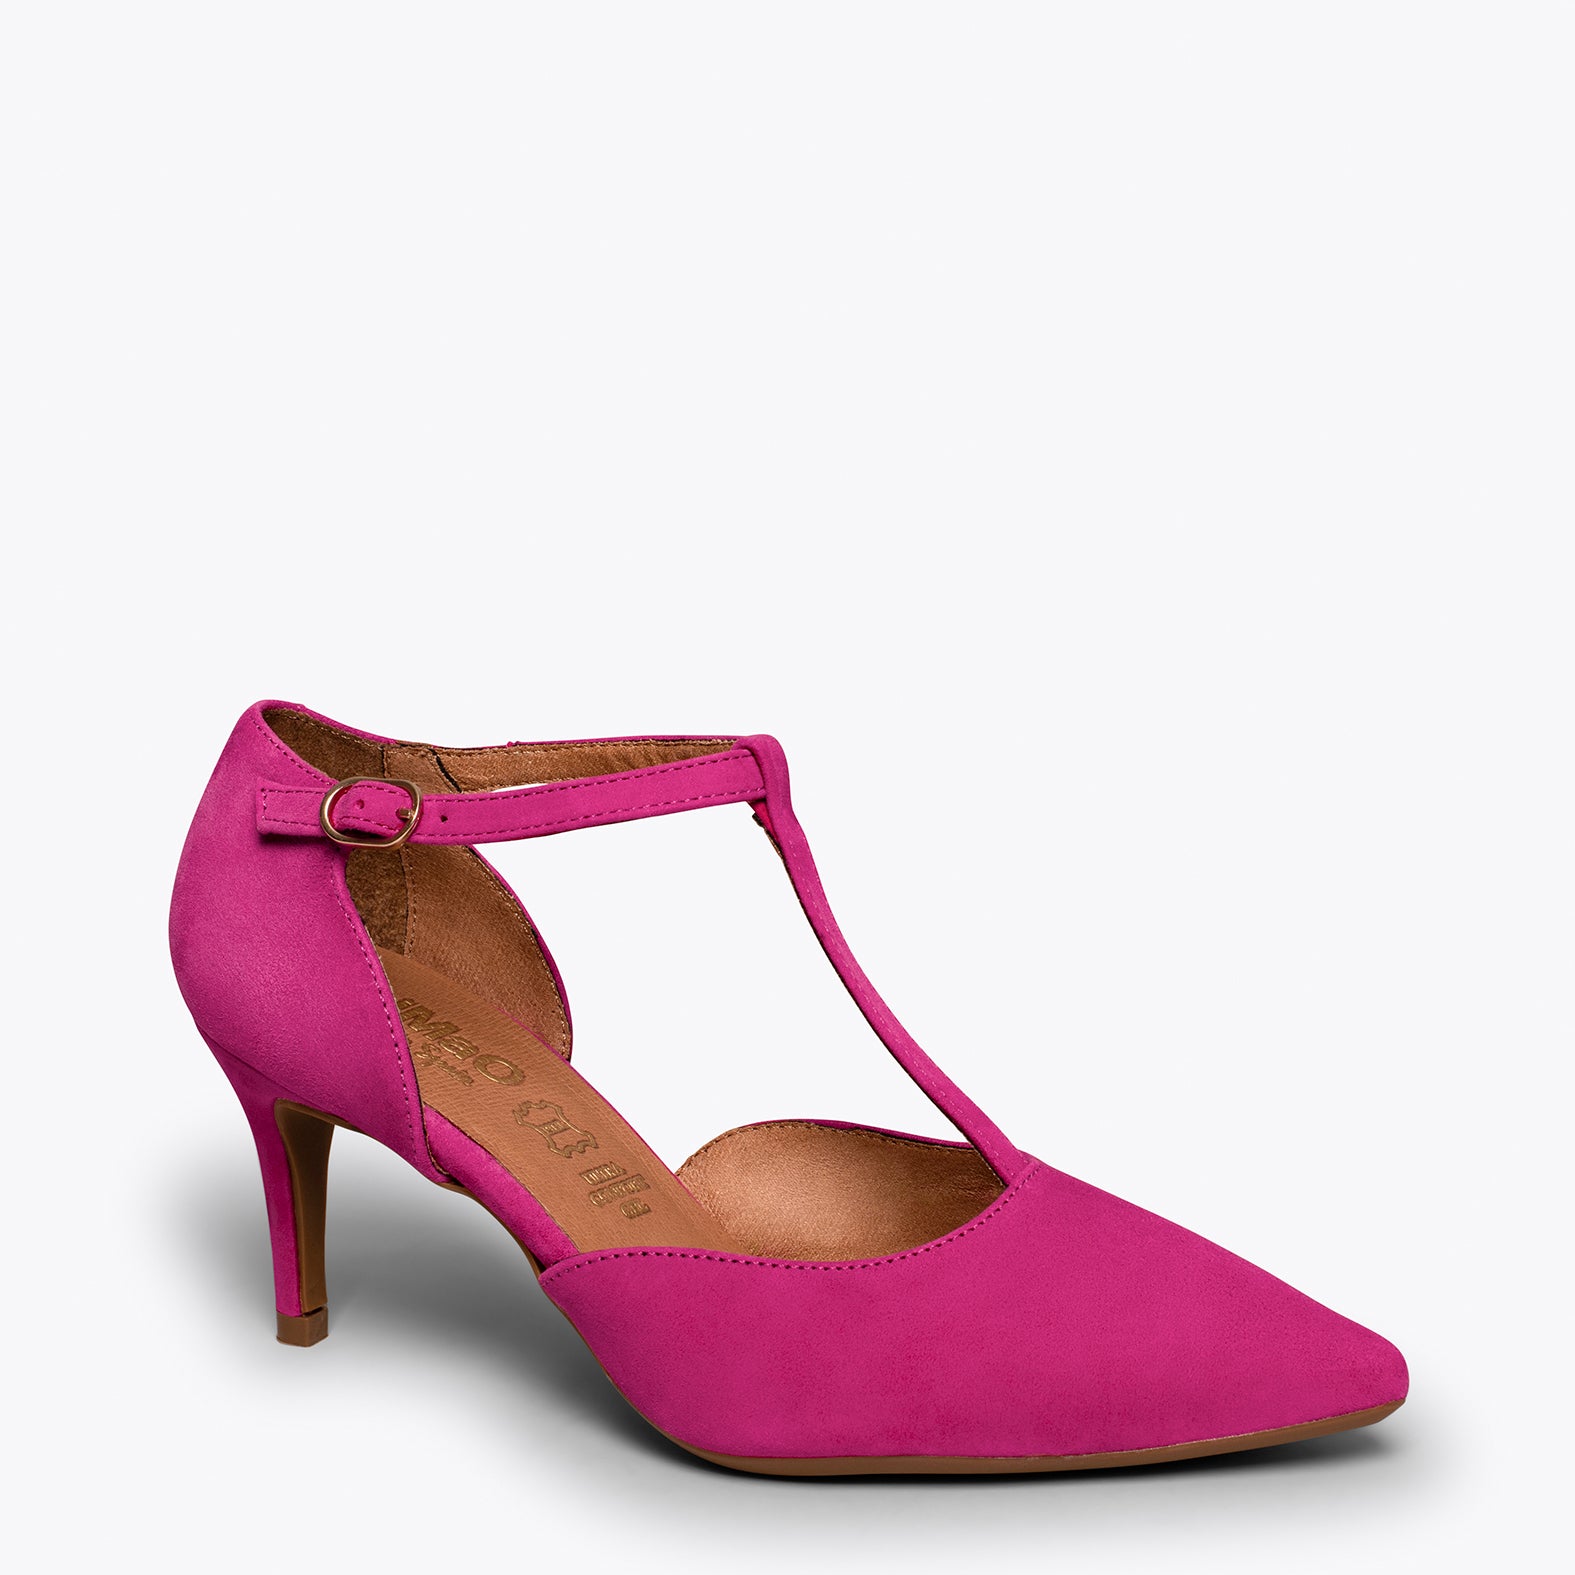 COCKTAIL – PINK elegant mid heel shoes